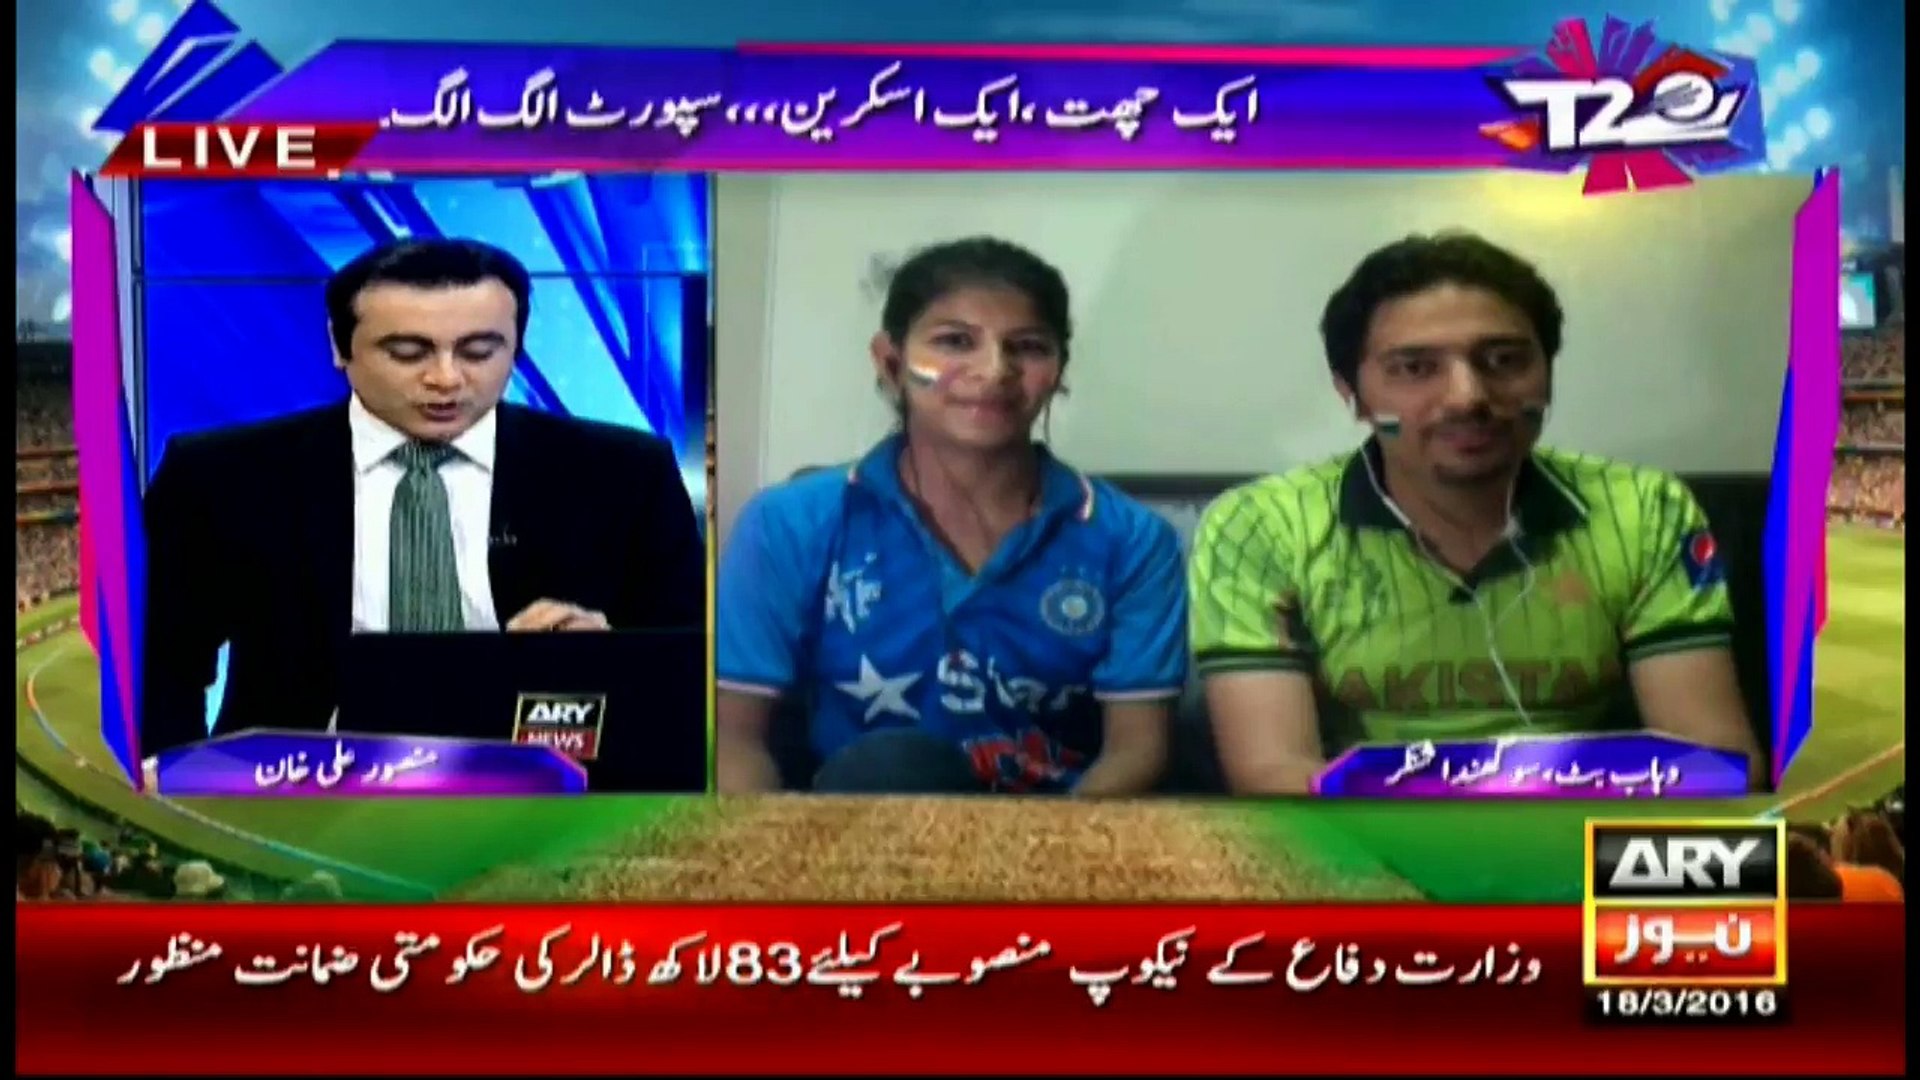 Pak-India match fever high across social media